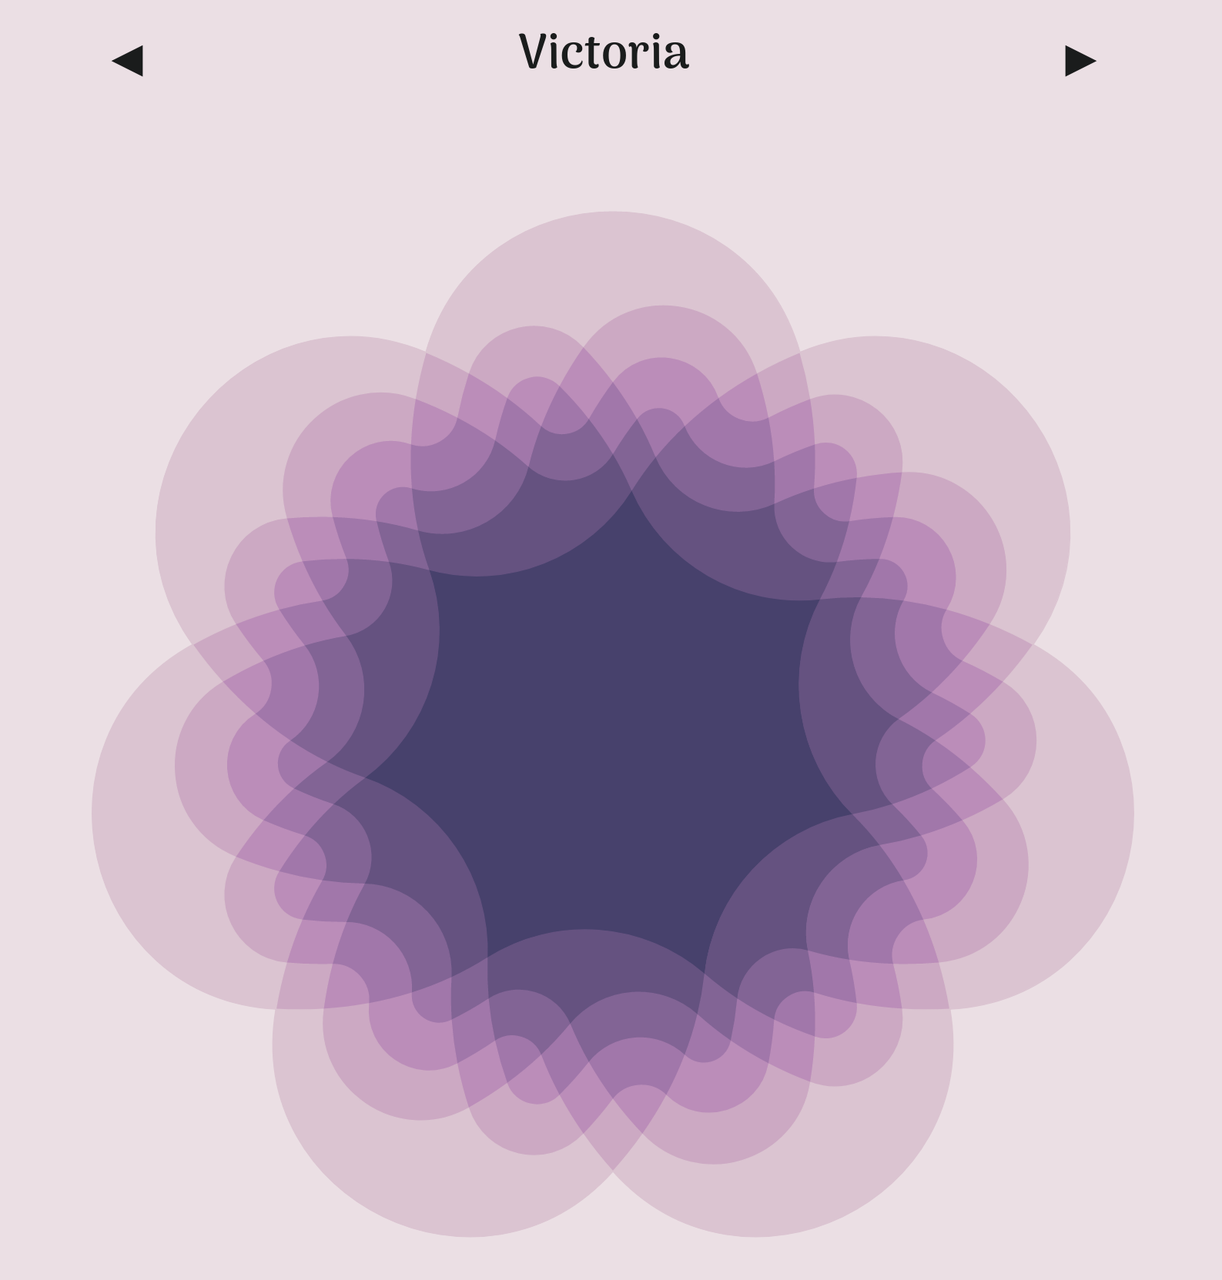 A symmetric 7-fold Venn diagram labeled "Victoria" with a pink and purple color scheme.